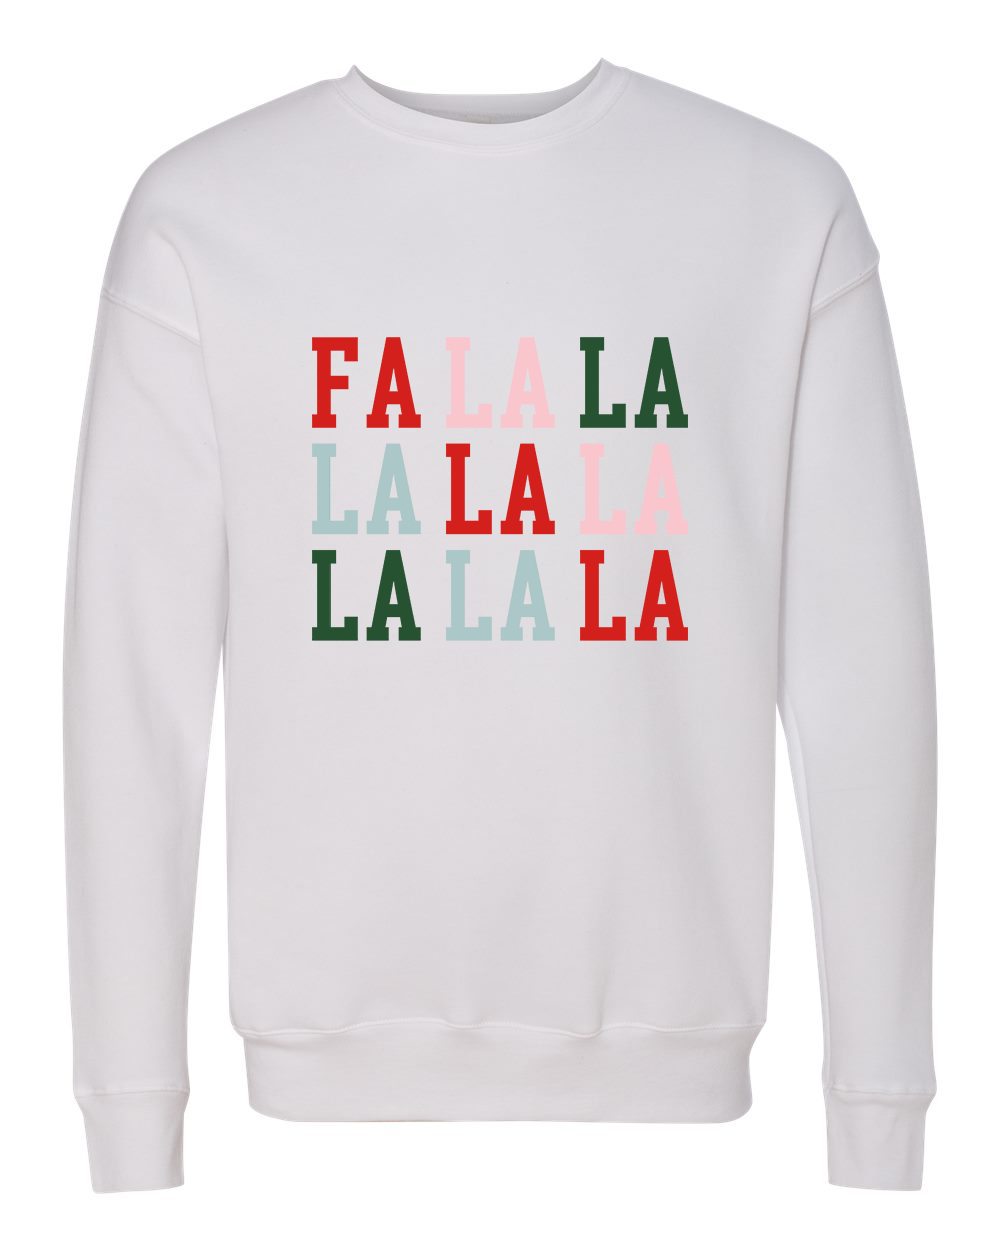 FALALALA Crewneck Sweatshirt - In 2 Colors